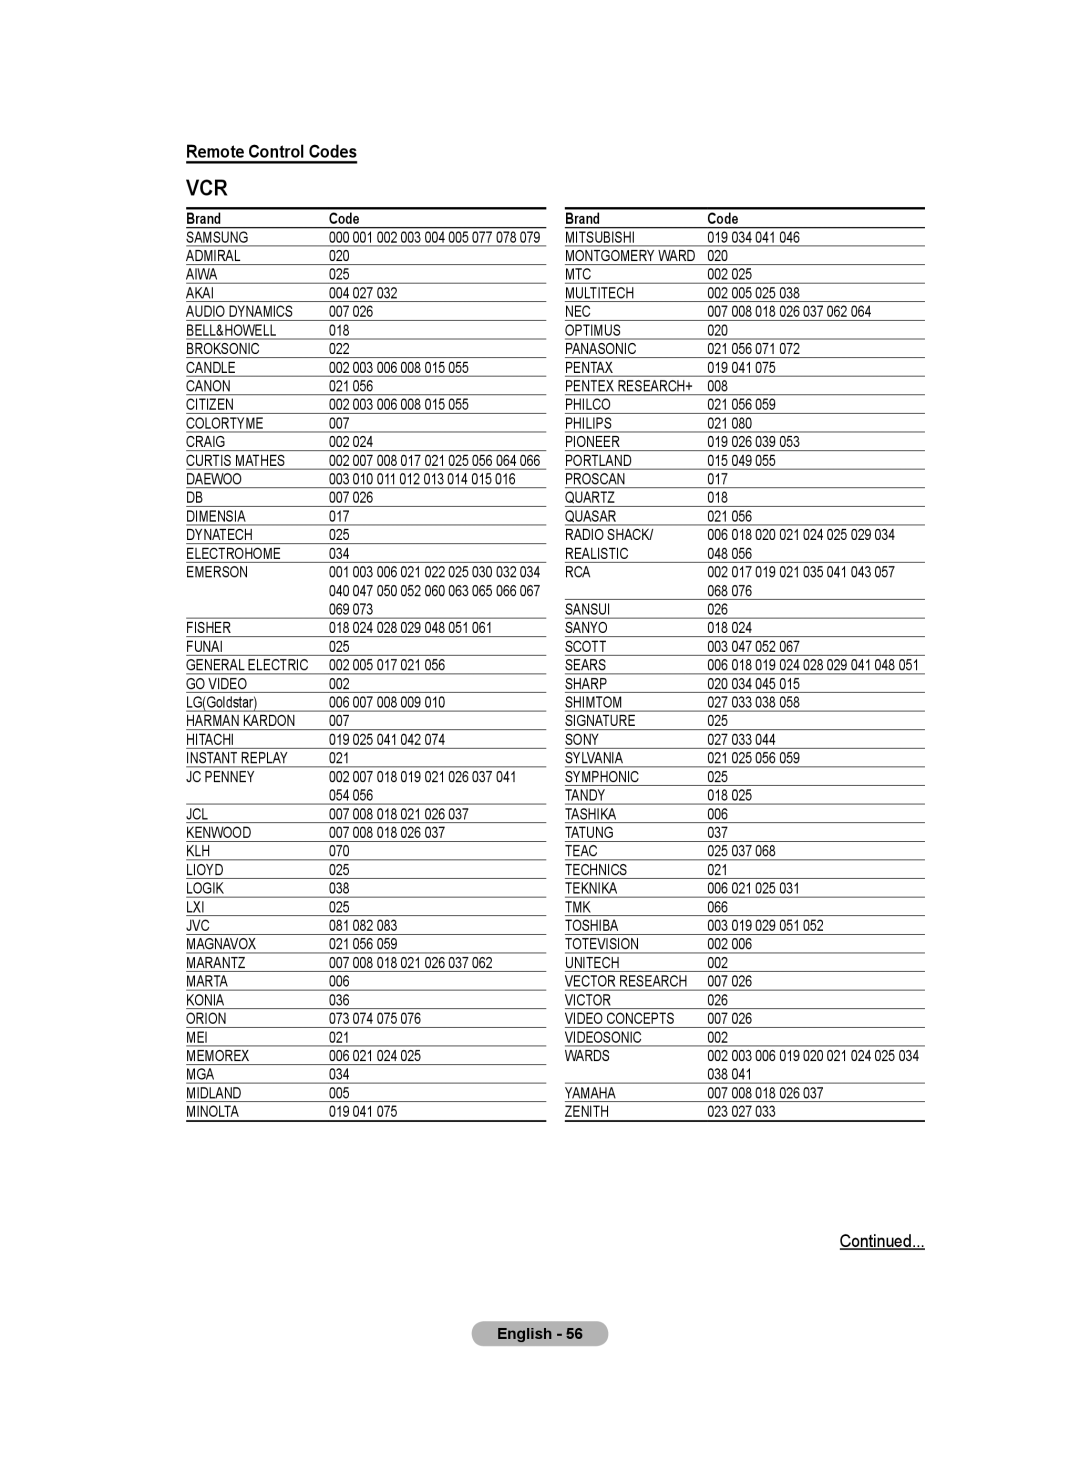 Samsung BN68-01171B-03 manual Remote Control Codes, Brand, English 